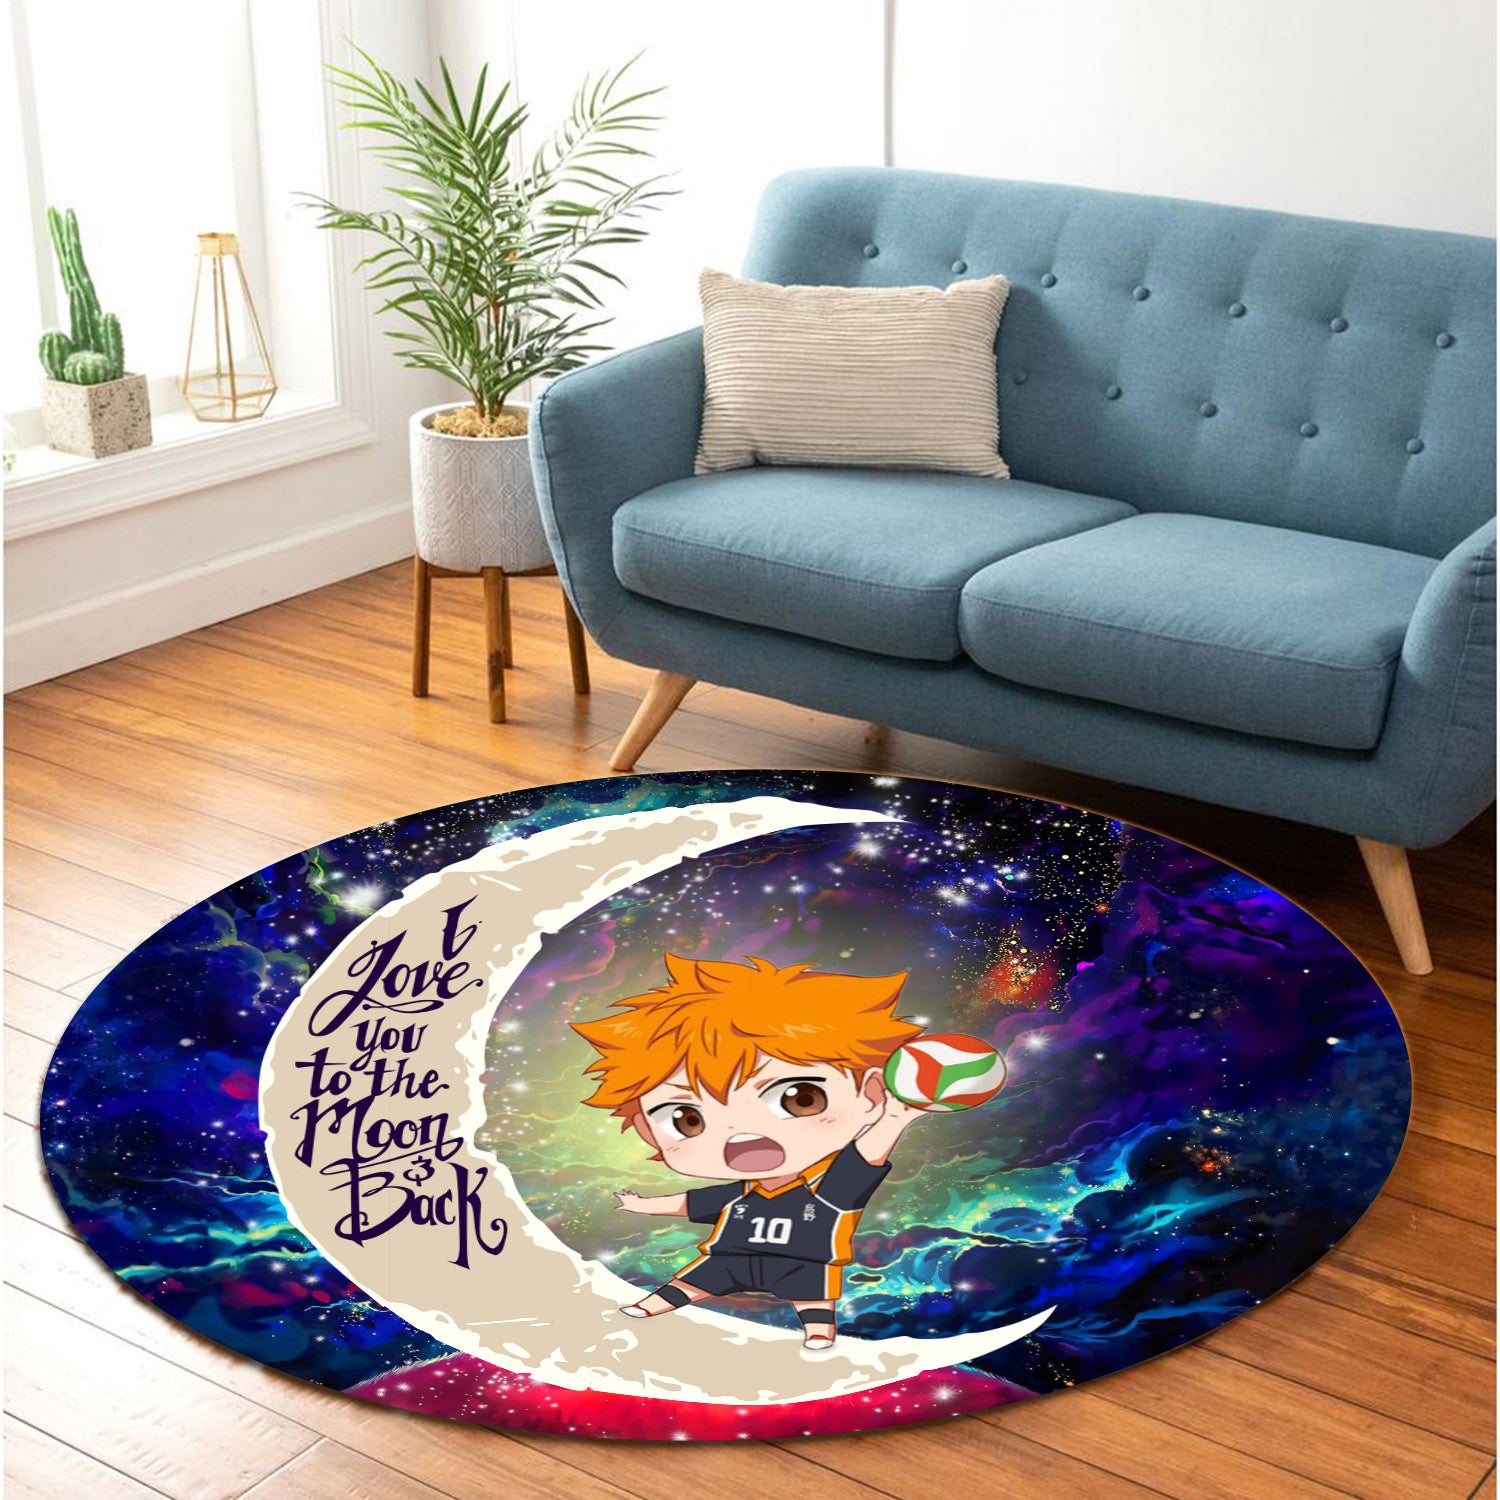 Hinata Haikyuu Love You To The Moon Galaxy Round Carpet Rug Bedroom Livingroom Home Decor Nearkii